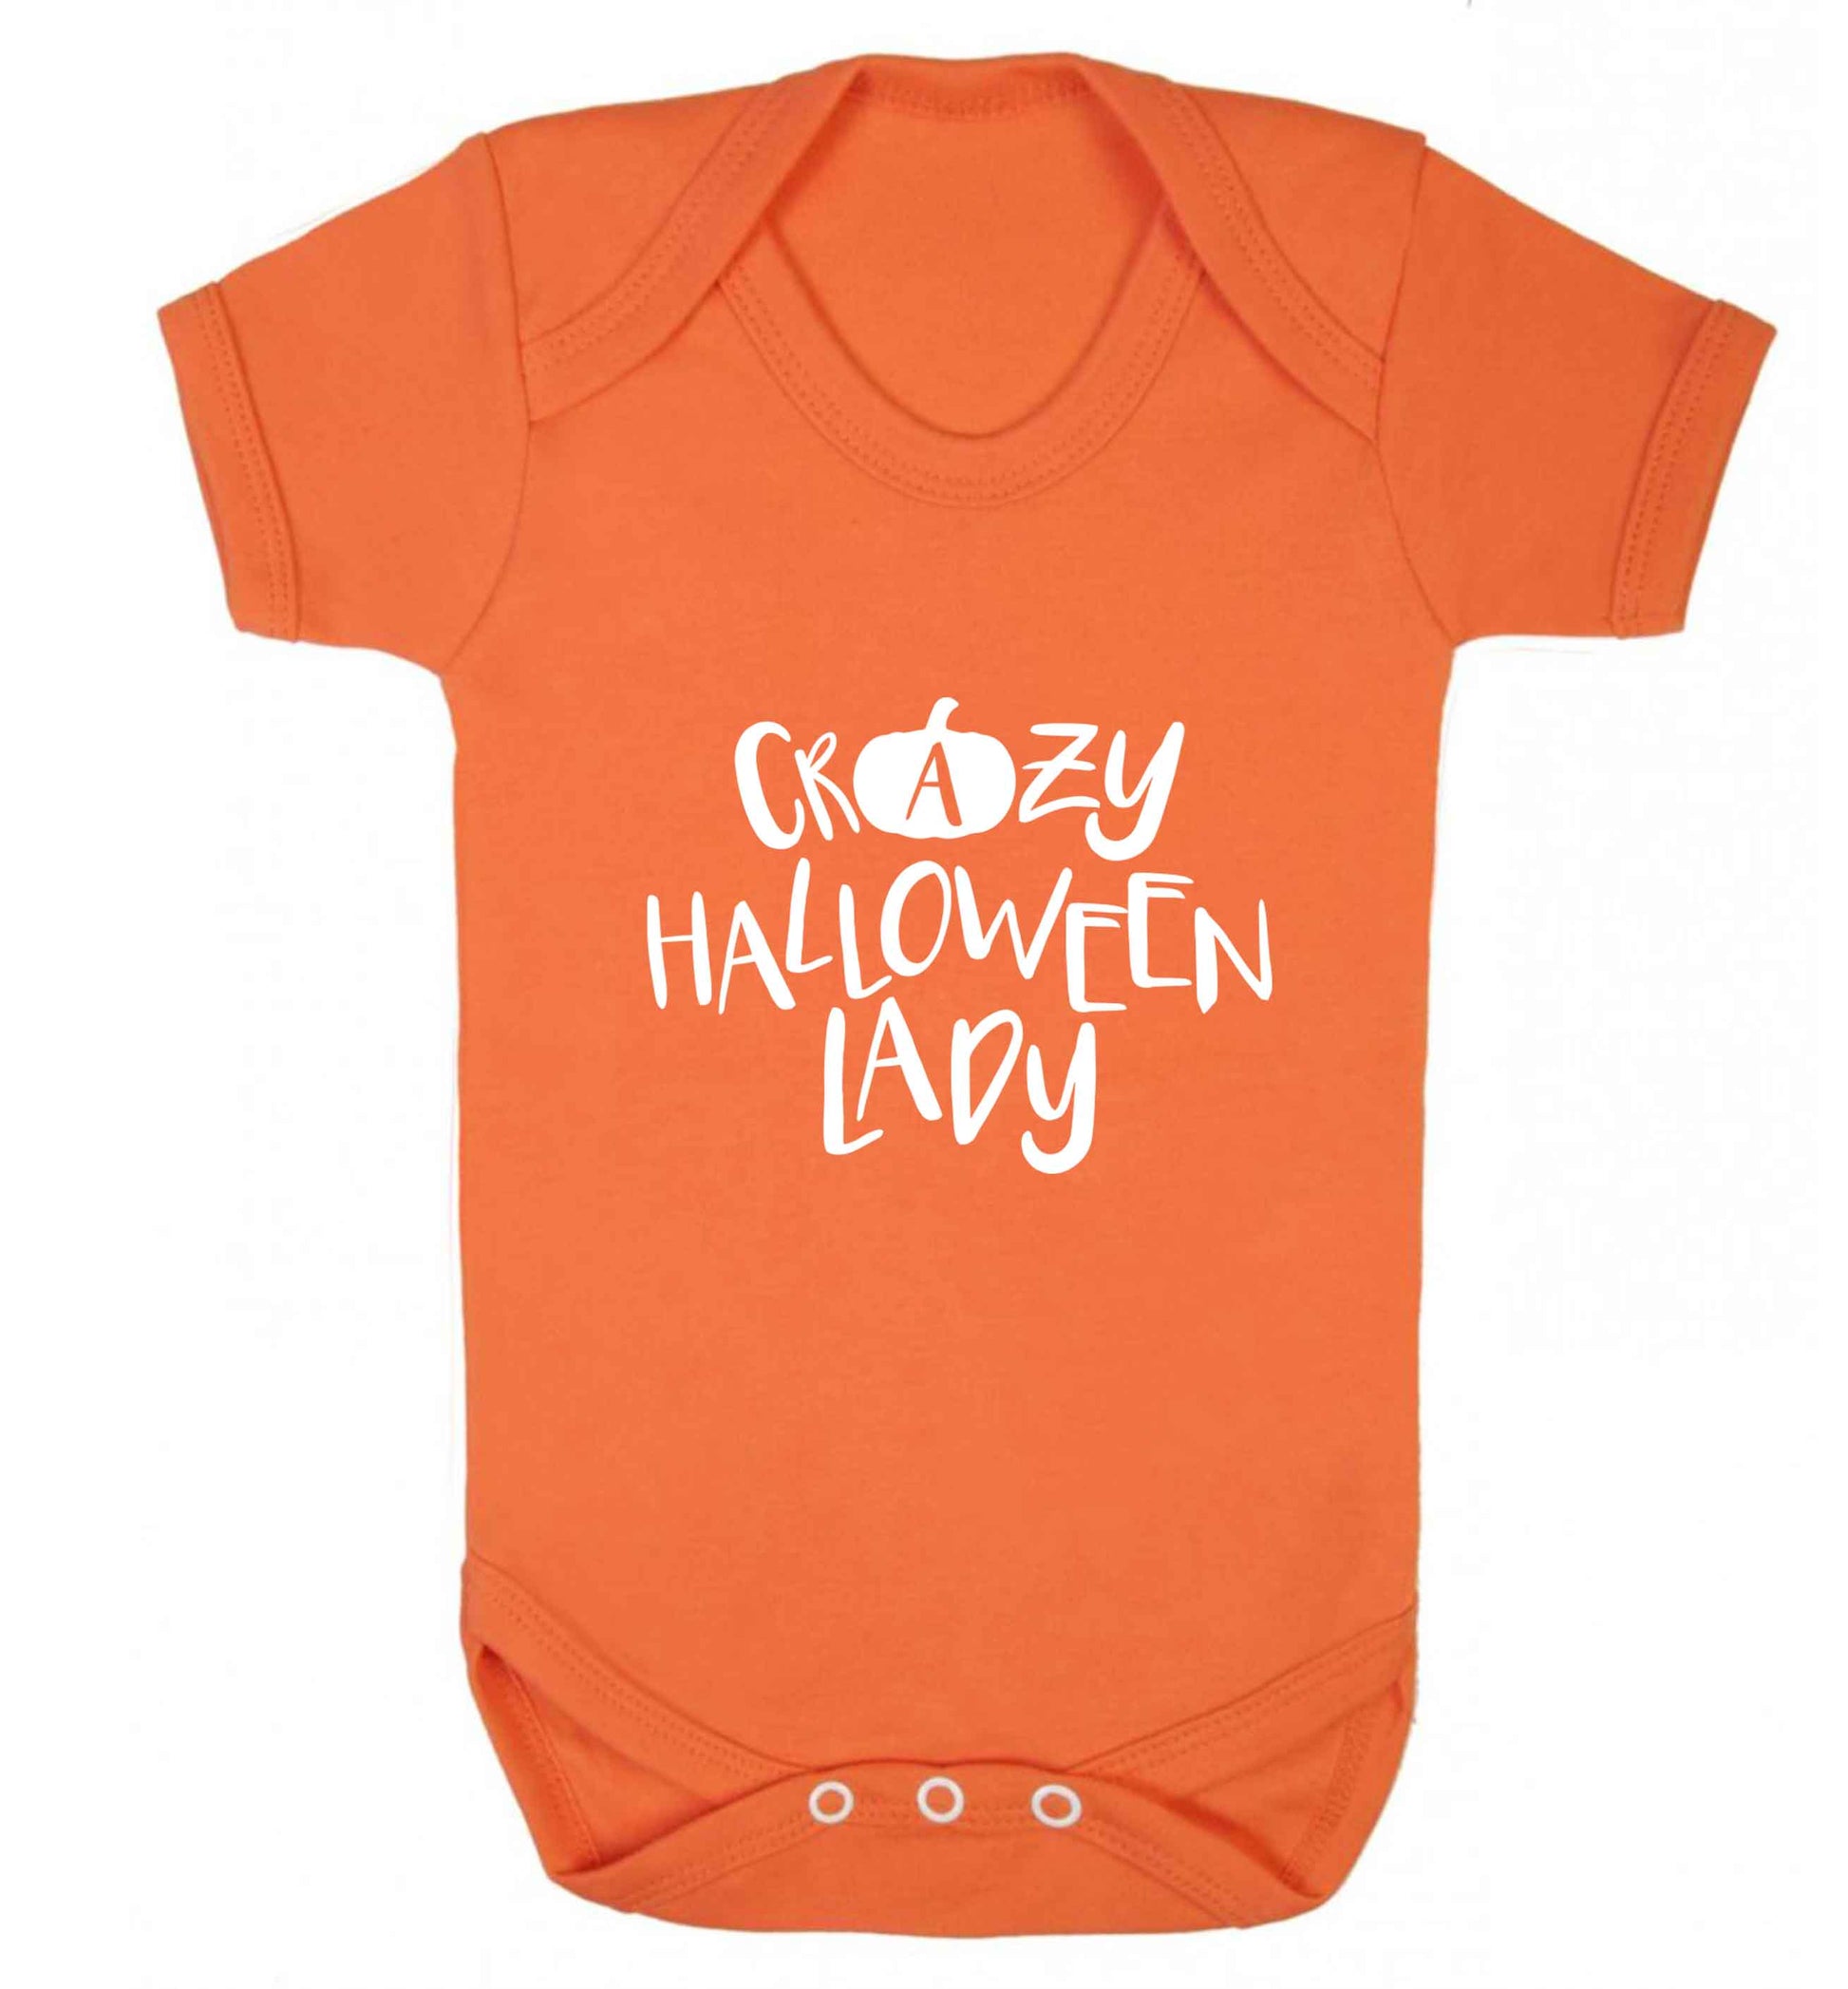 Crazy halloween lady baby vest orange 18-24 months